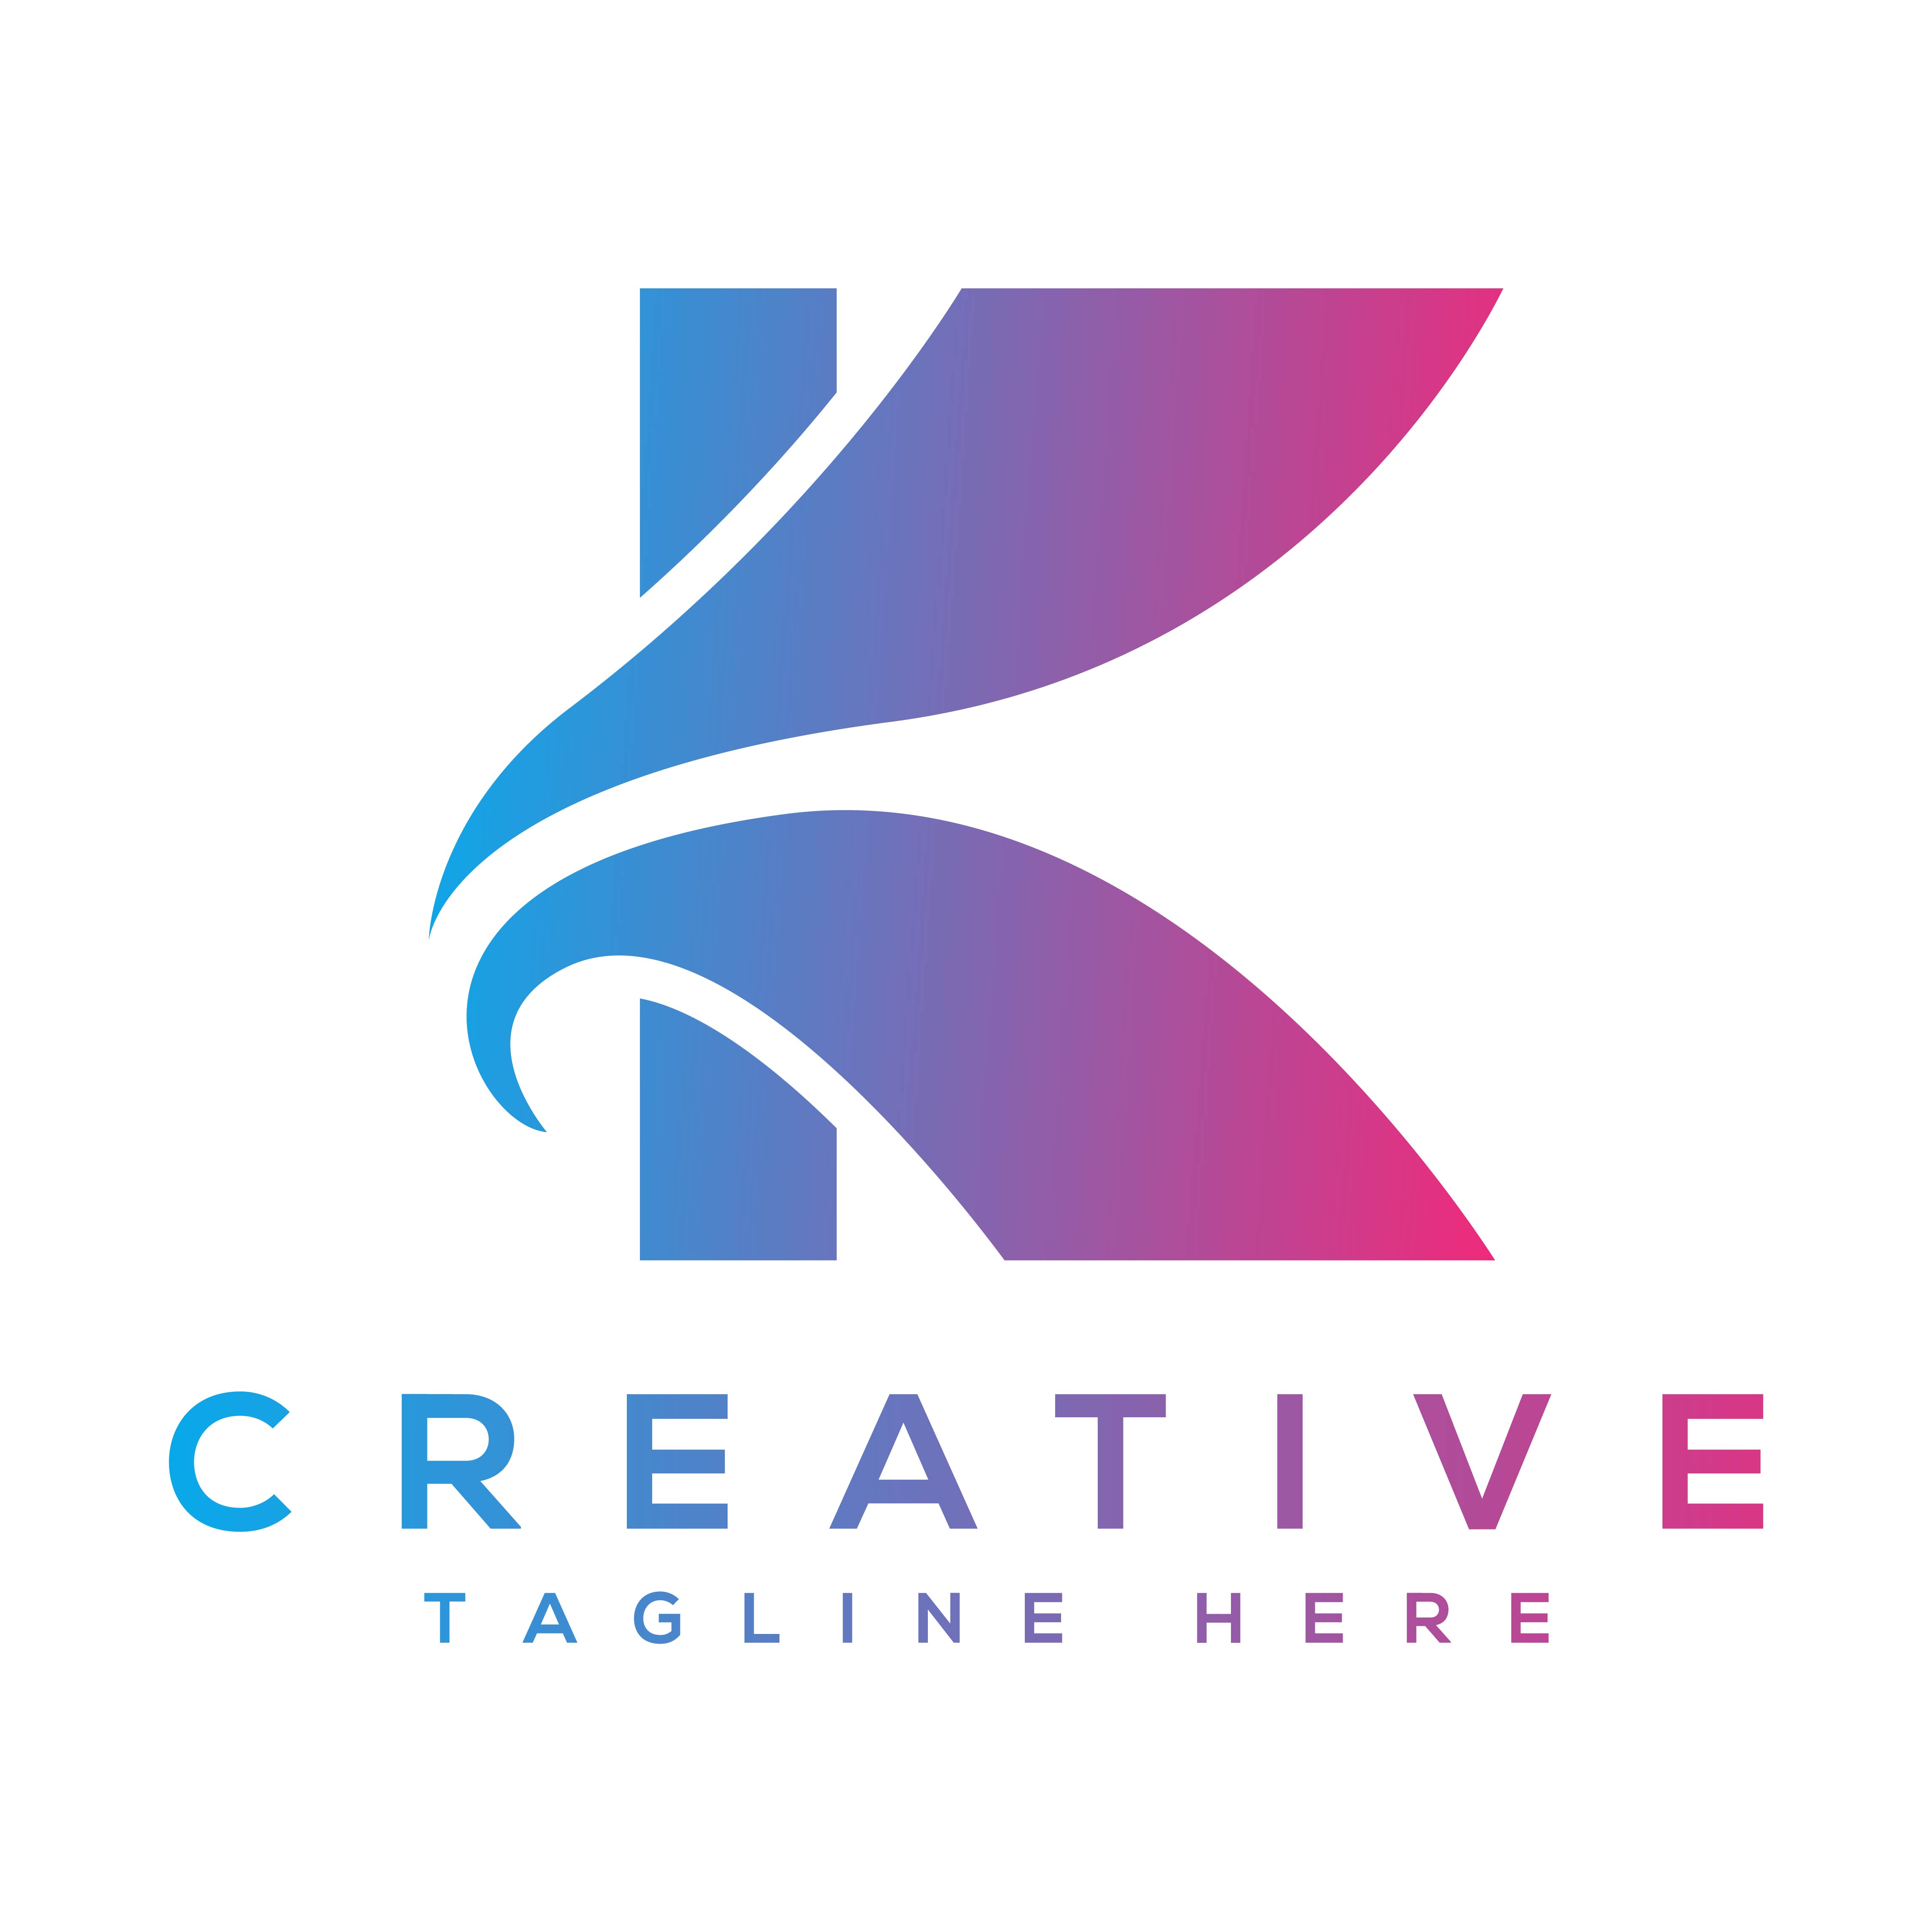 Letter K Logo Design cover image.